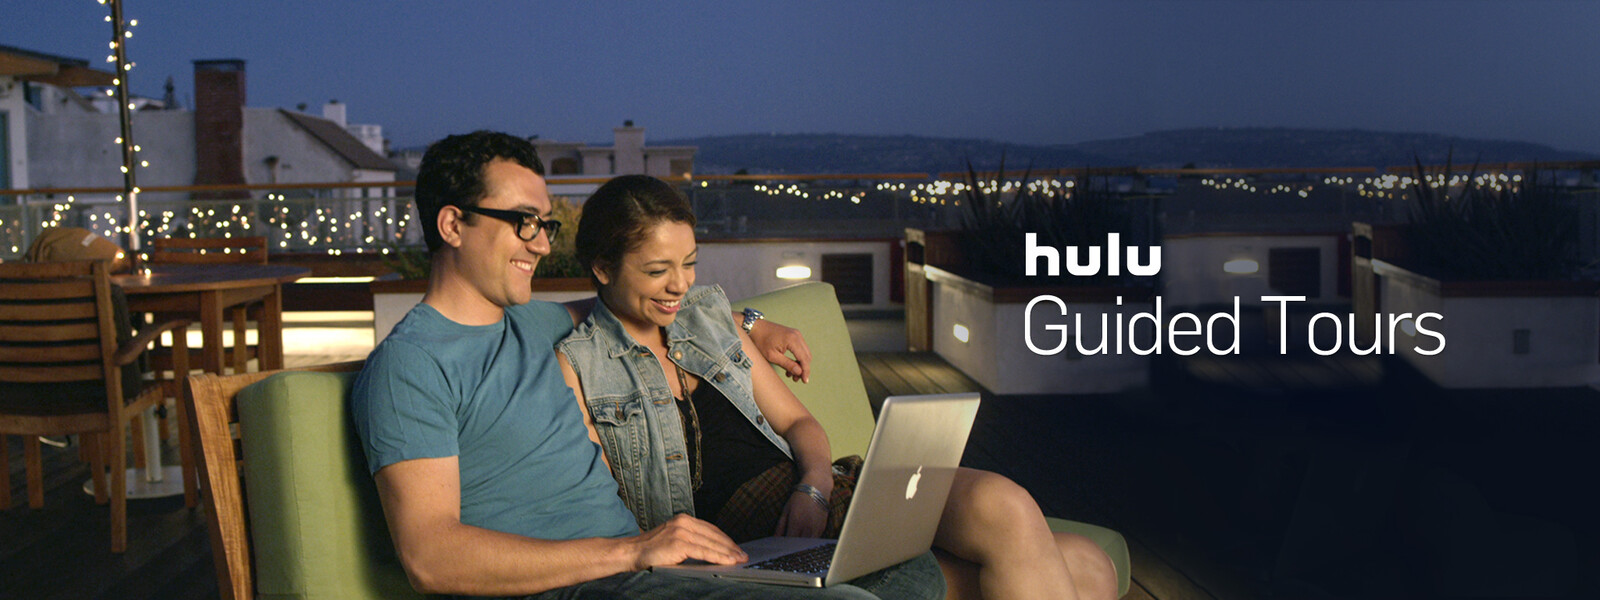 Hulu ガイドツアーの動画 - Huluおすすめラインナップ